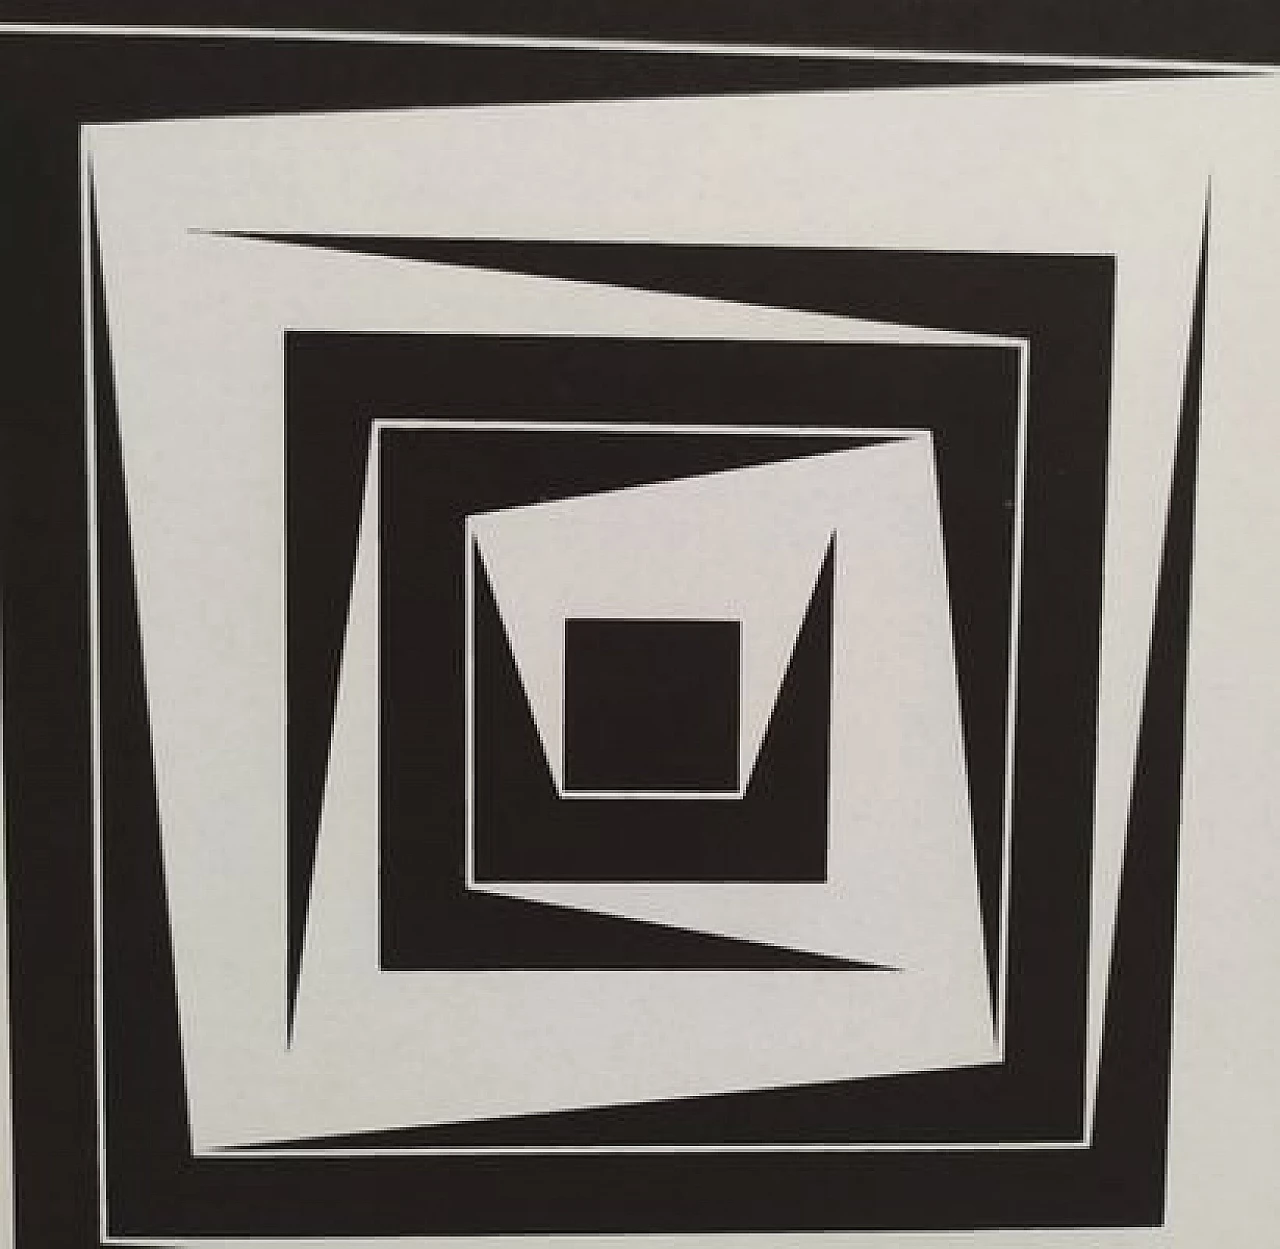 Marcello Morandini, kinetic composition, lithography, 1974 2